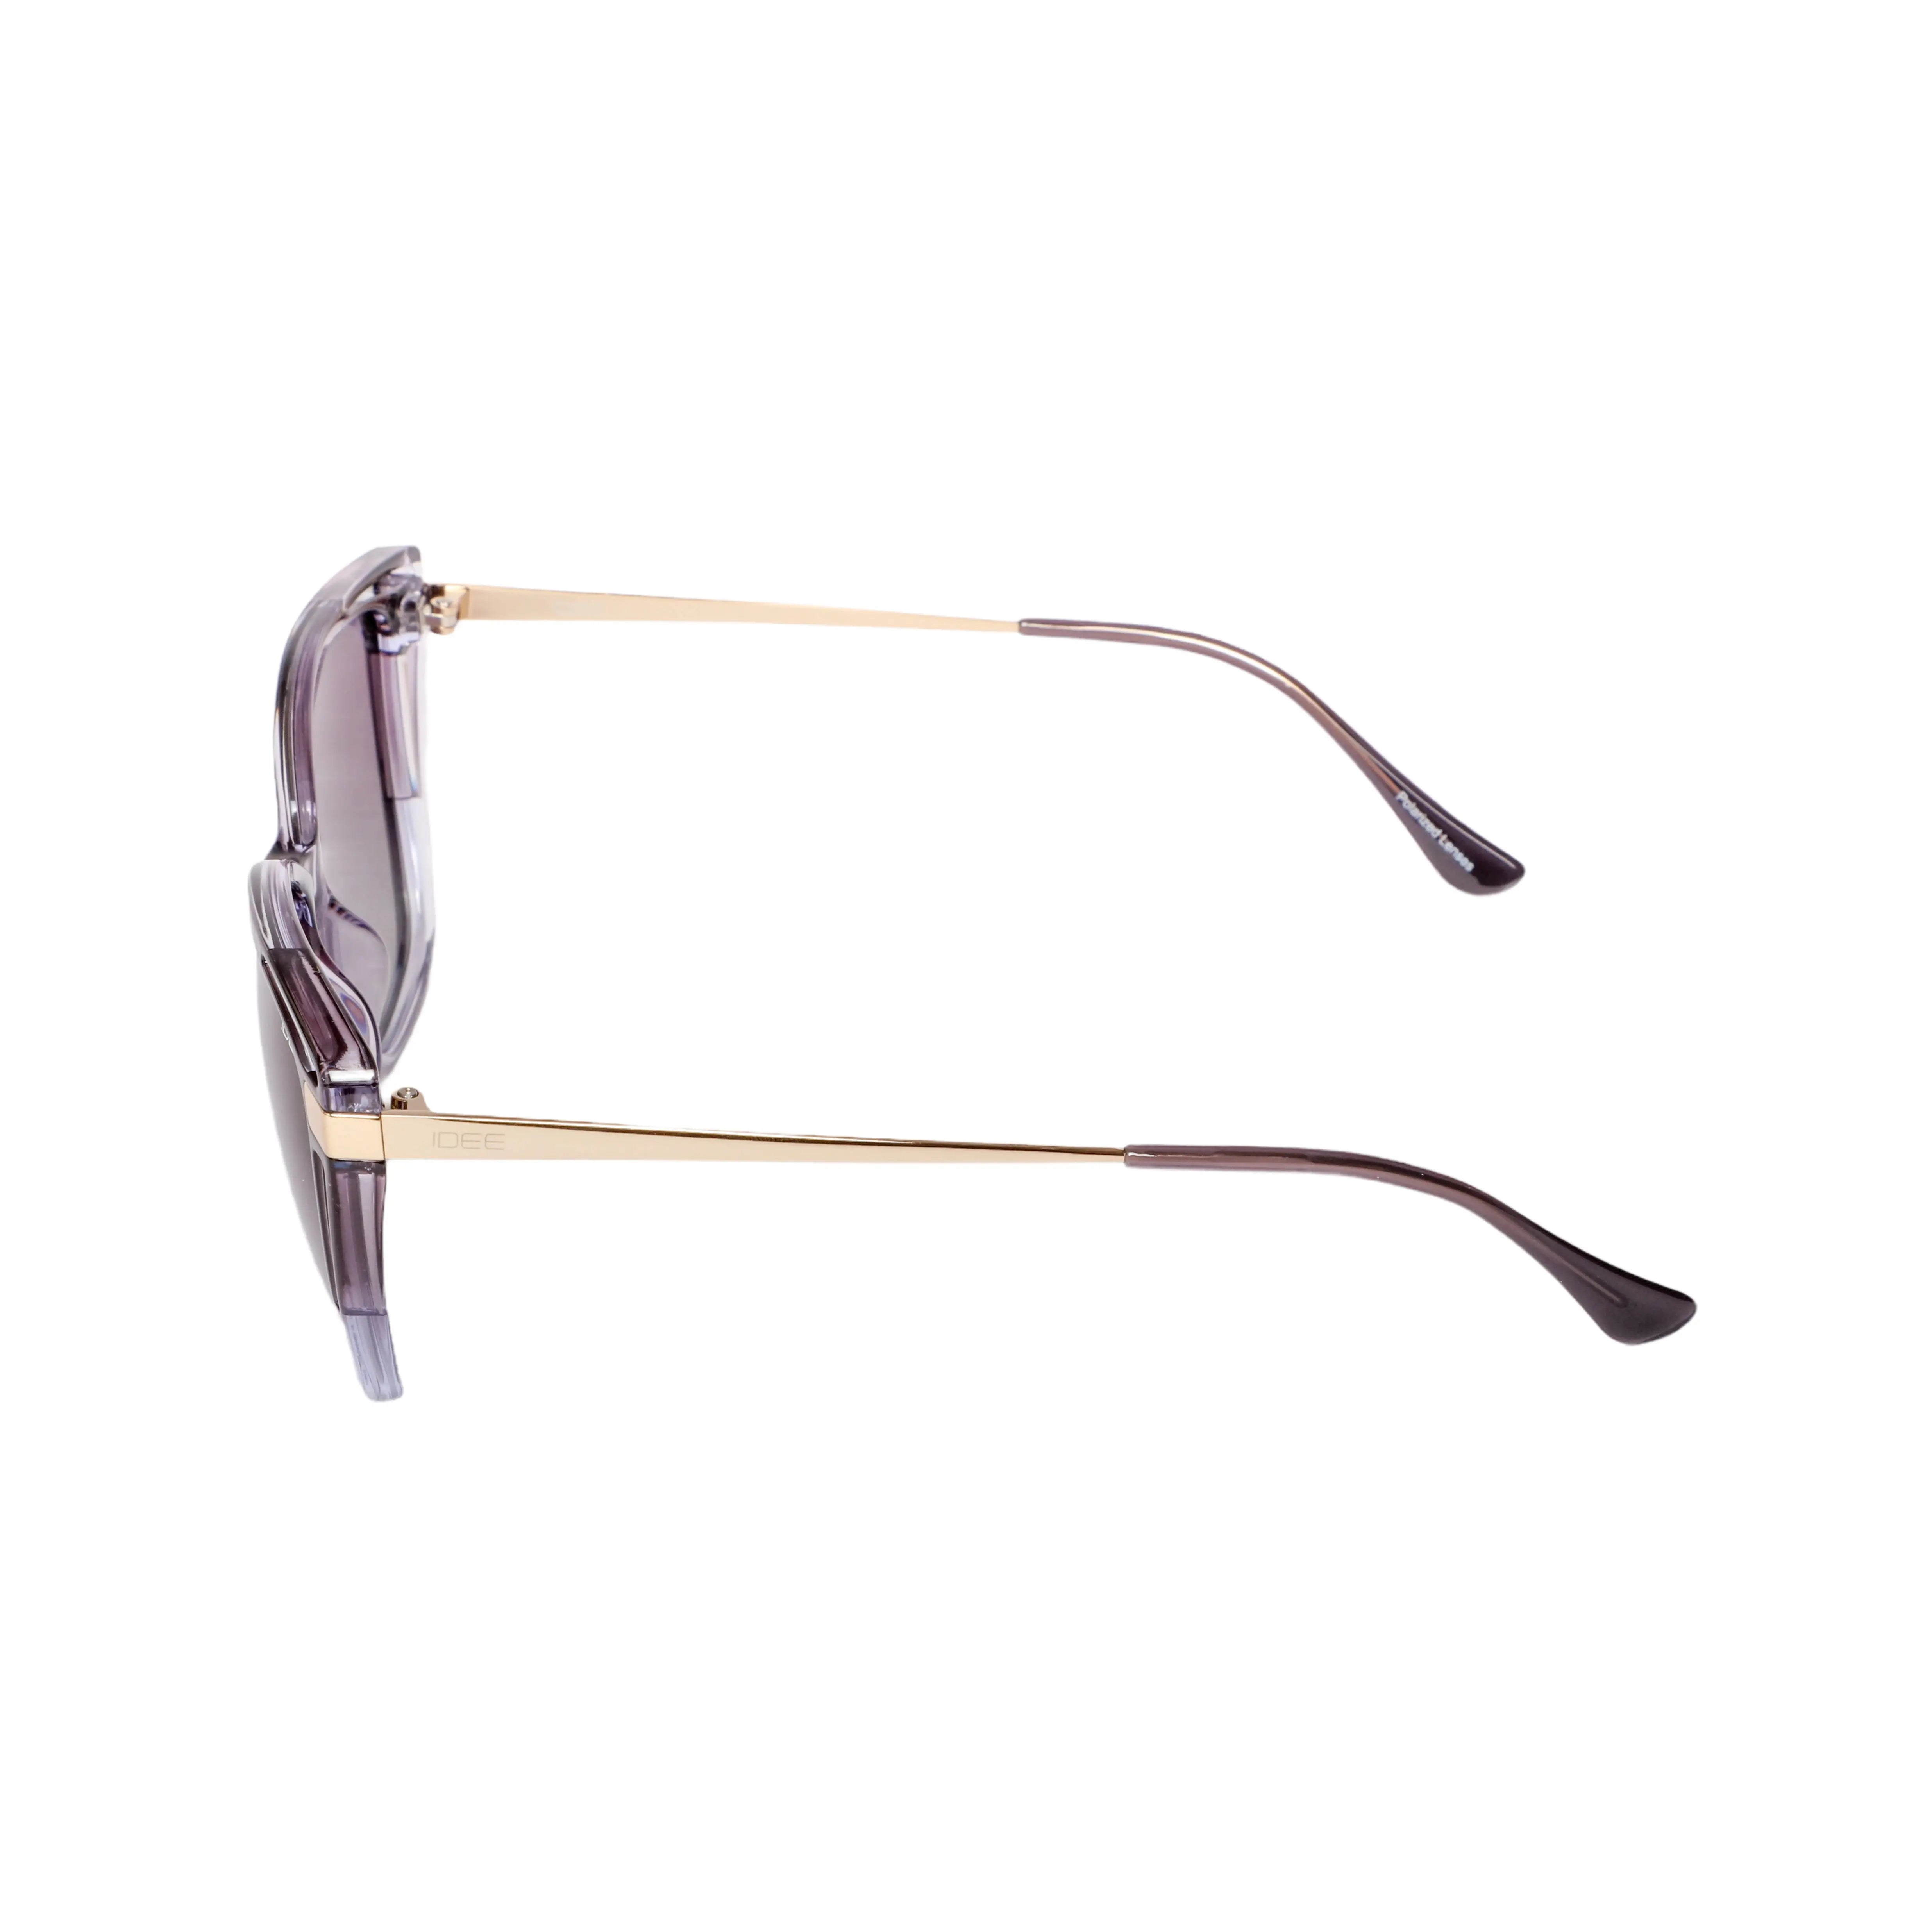 IDEE-S3016--C3 Sunglasses - Premium Sunglasses from IDEE - Just Rs. 3740! Shop now at Laxmi Opticians